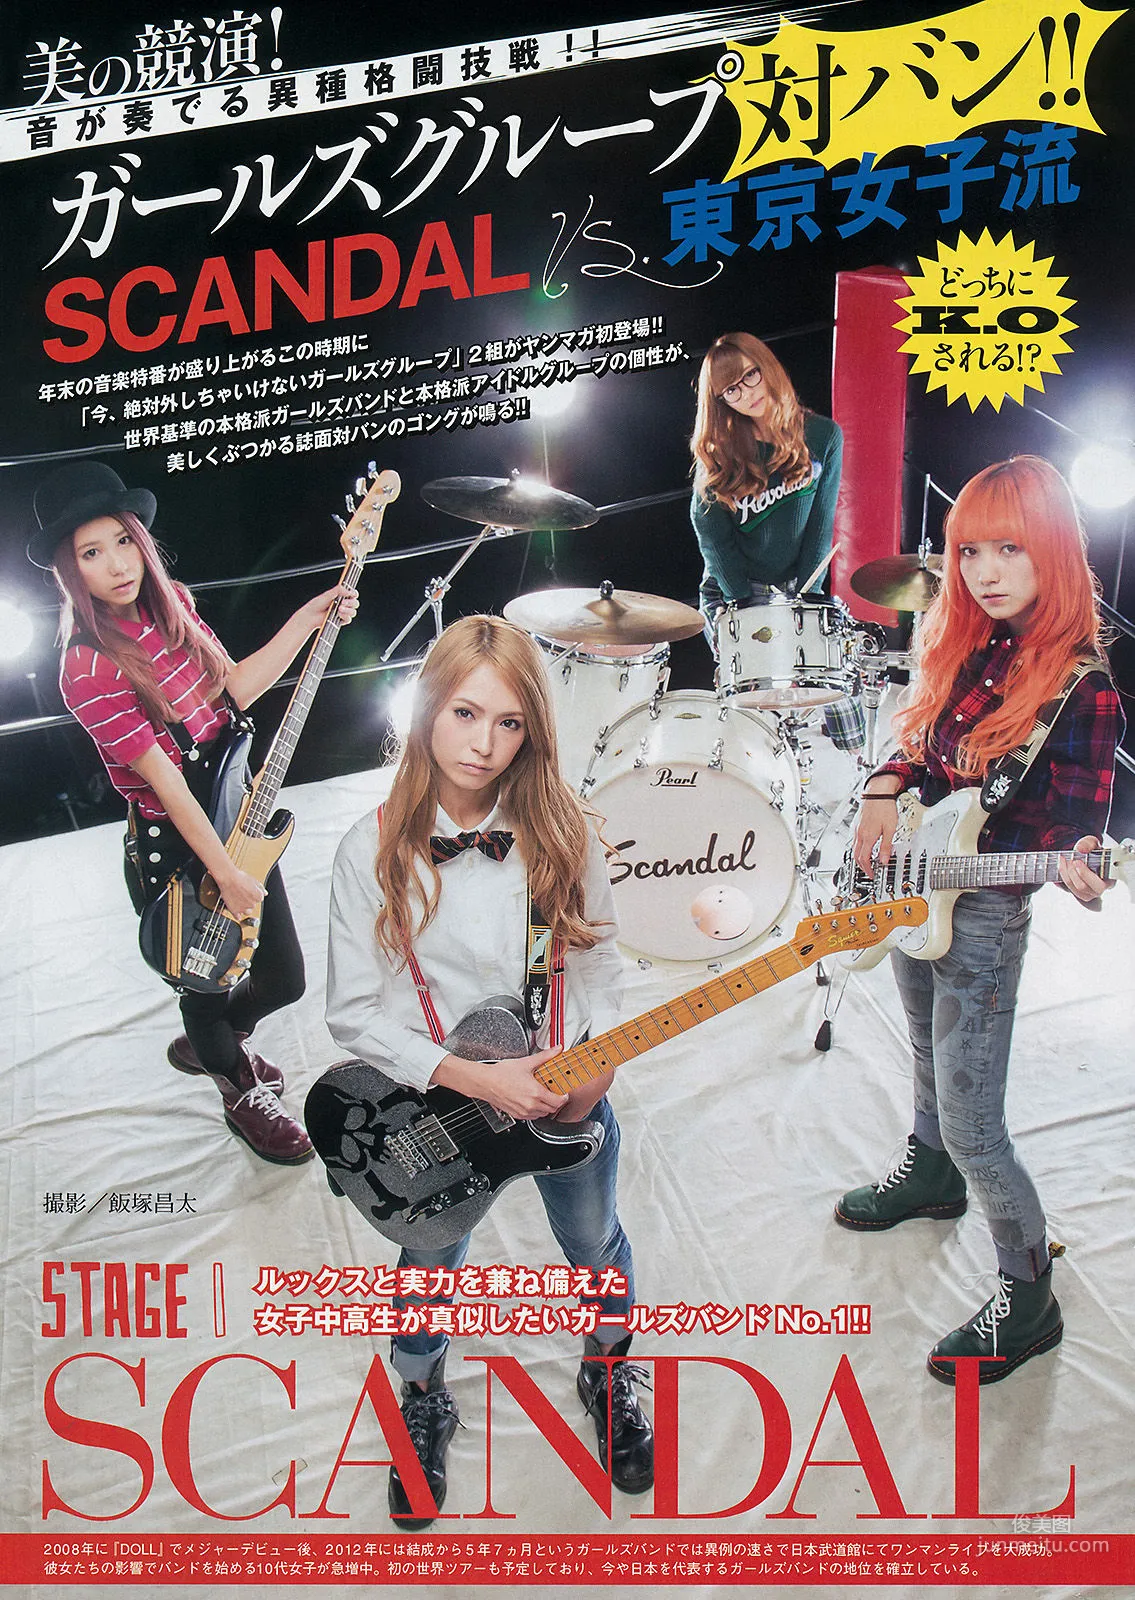 [Young Magazine] 橋本環奈 SCANDAL 東京女子流 2015年No.01 写真杂志8